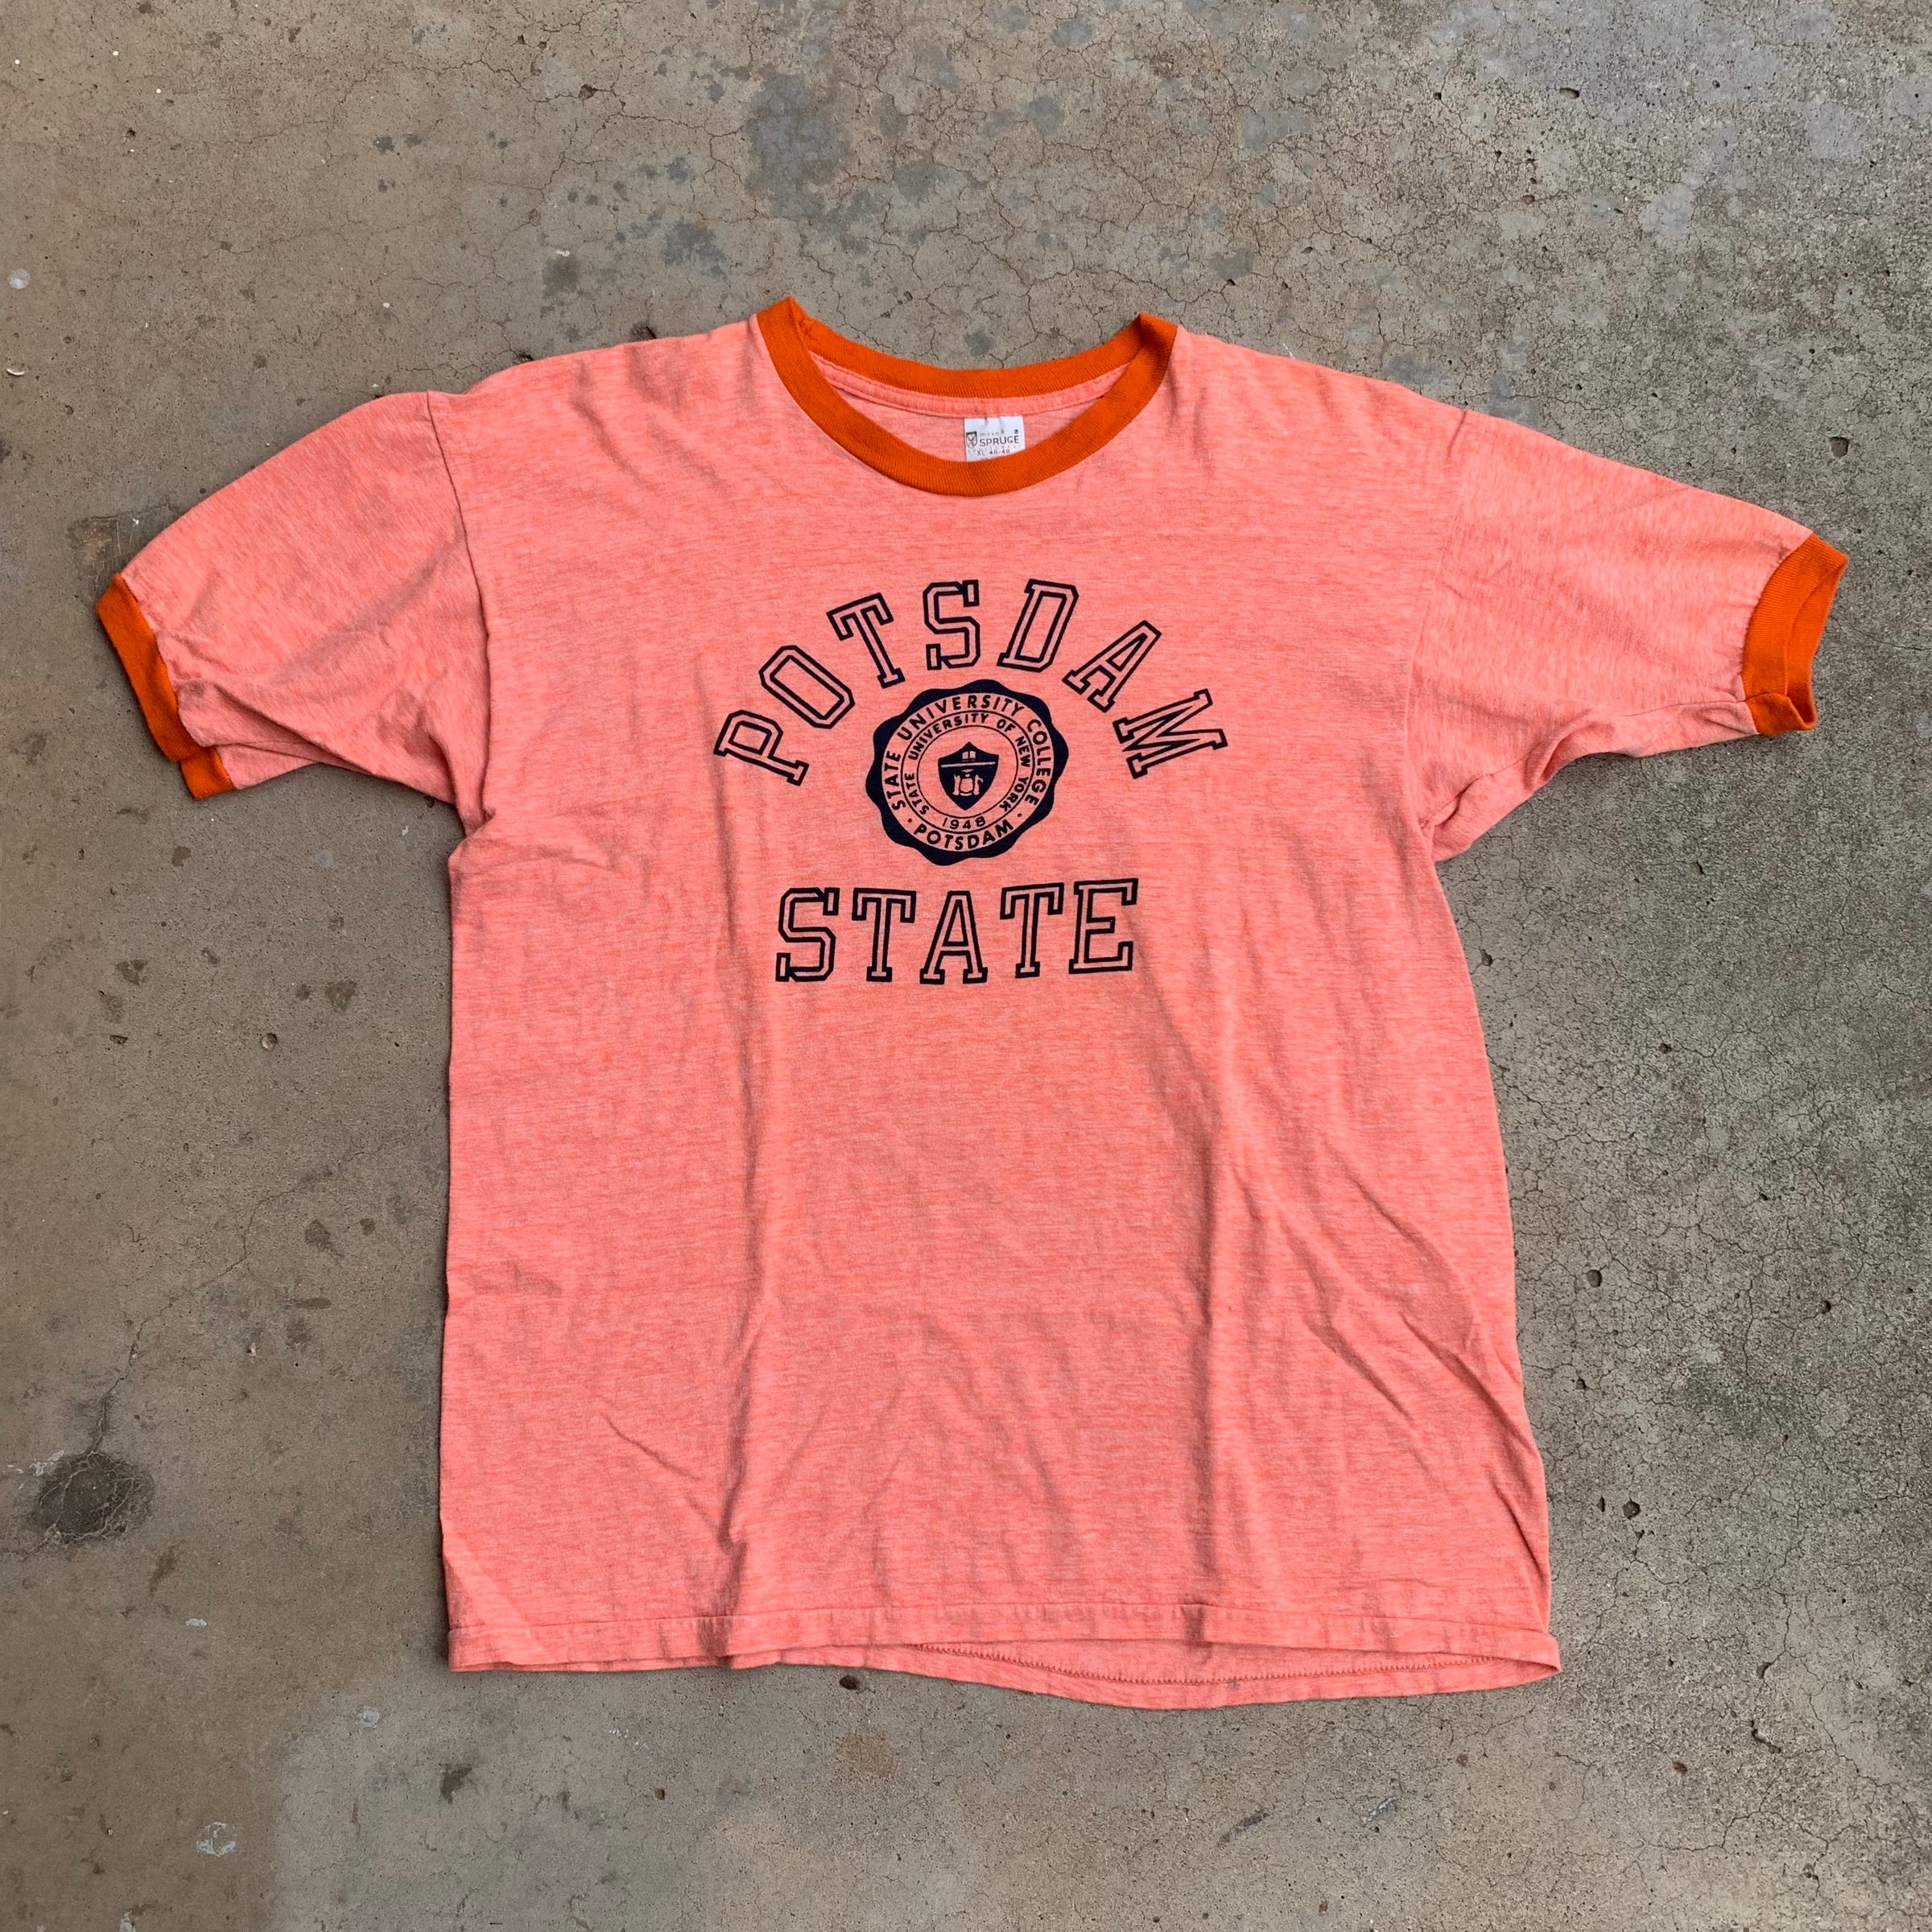 1970’s Potsdam State Heather Orange Ringer T-Shirt Medium